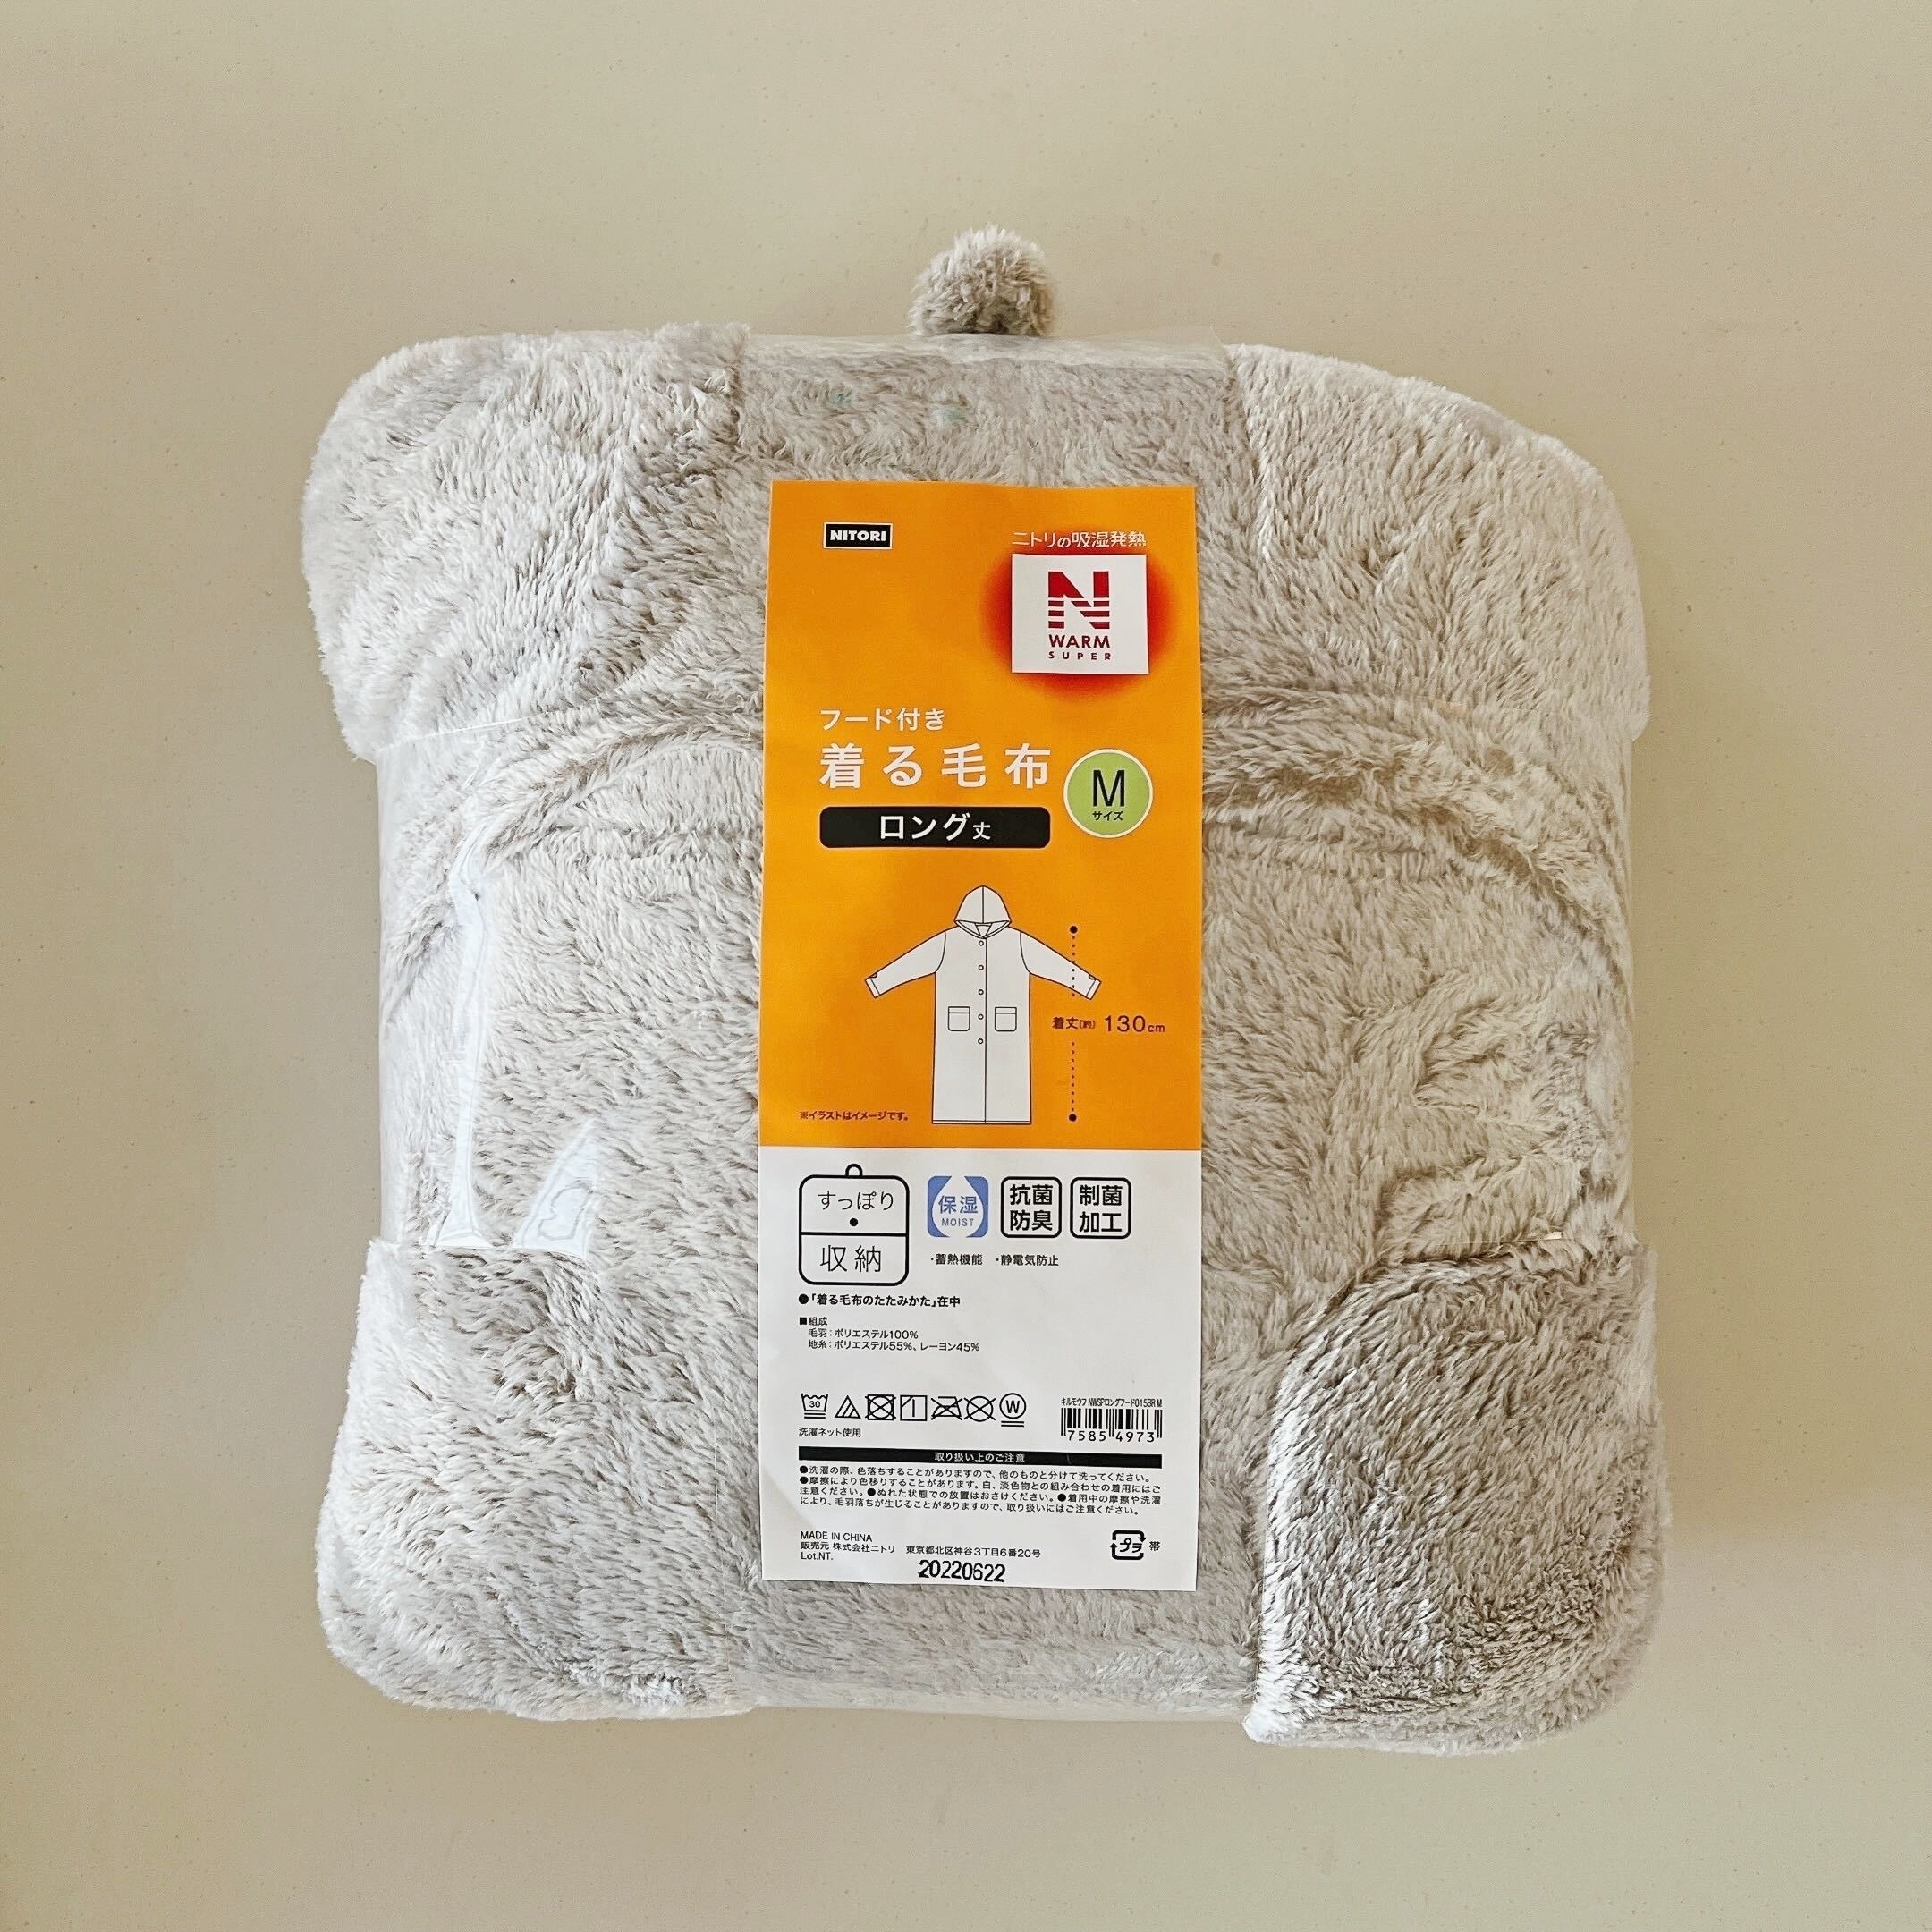 NITORI（ニトリ）のおすすめリラックスアイテム「すっぽり収納 フード付き着る毛布 ロング丈」